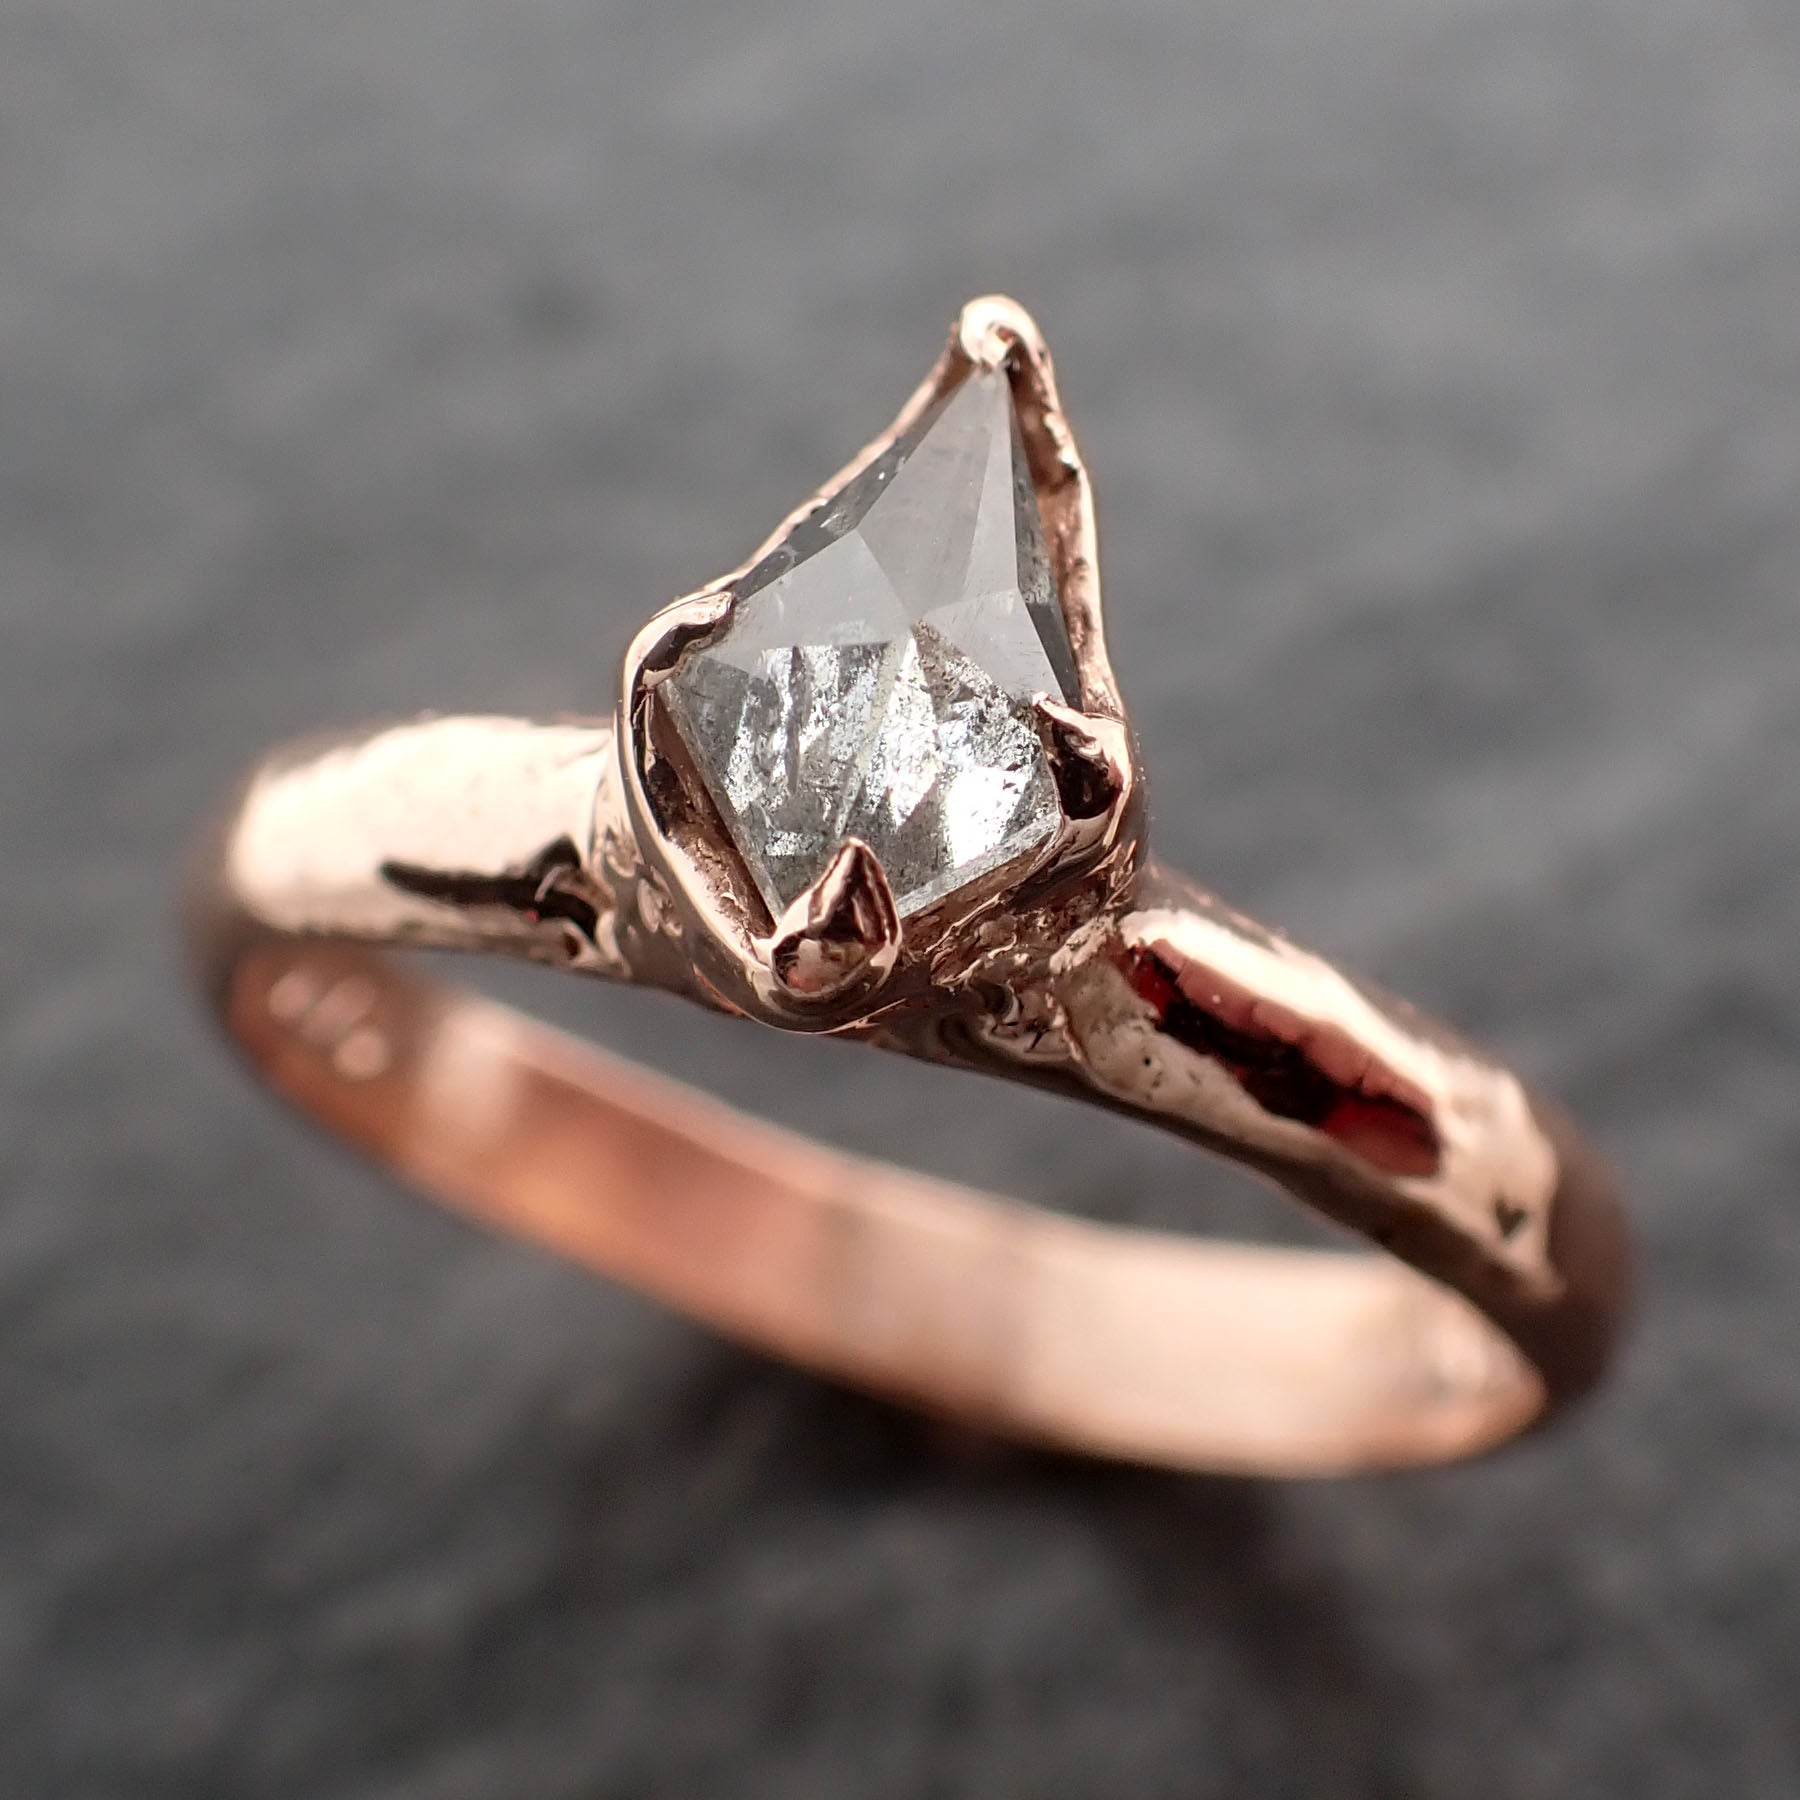 Fancy cut white Diamond Solitaire Engagement 14k Rose Gold Wedding Ring byAngeline 2458